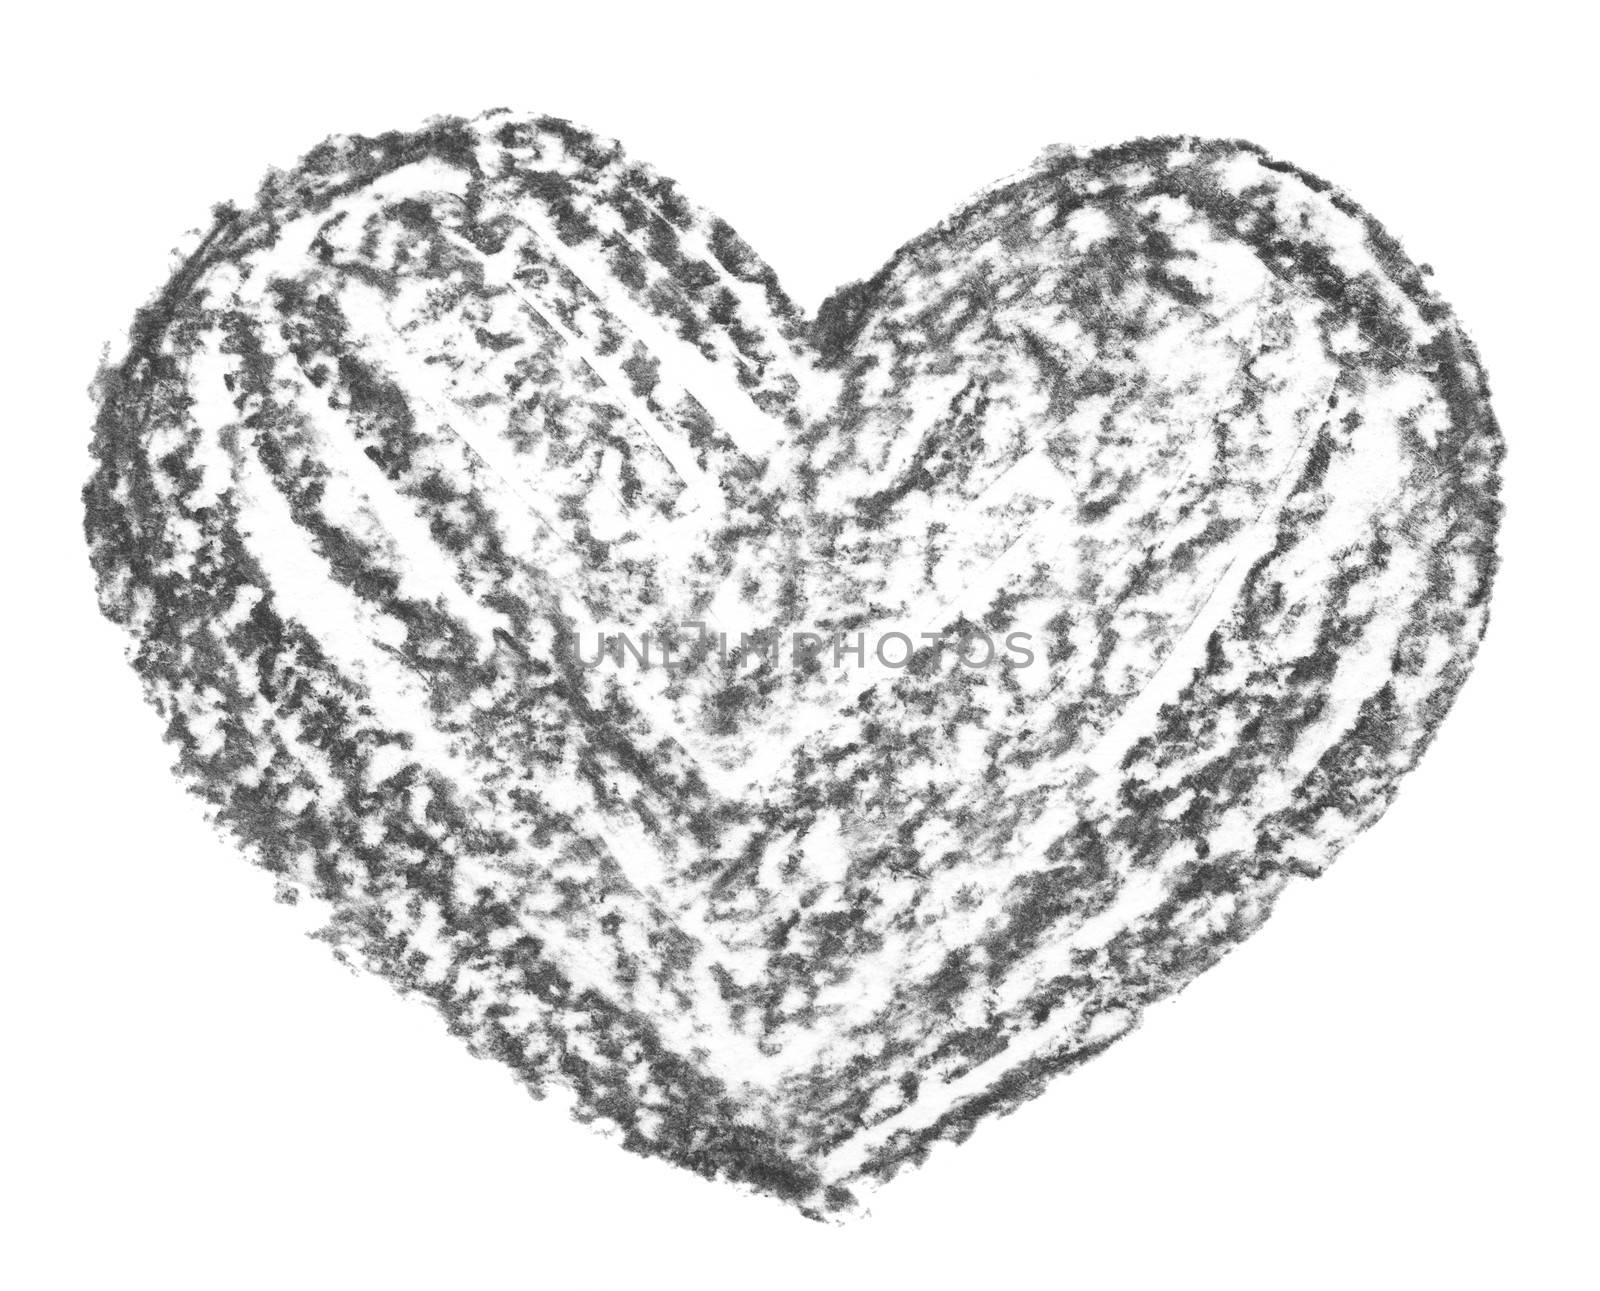 Hand drawn, crayon heart shape by anelina